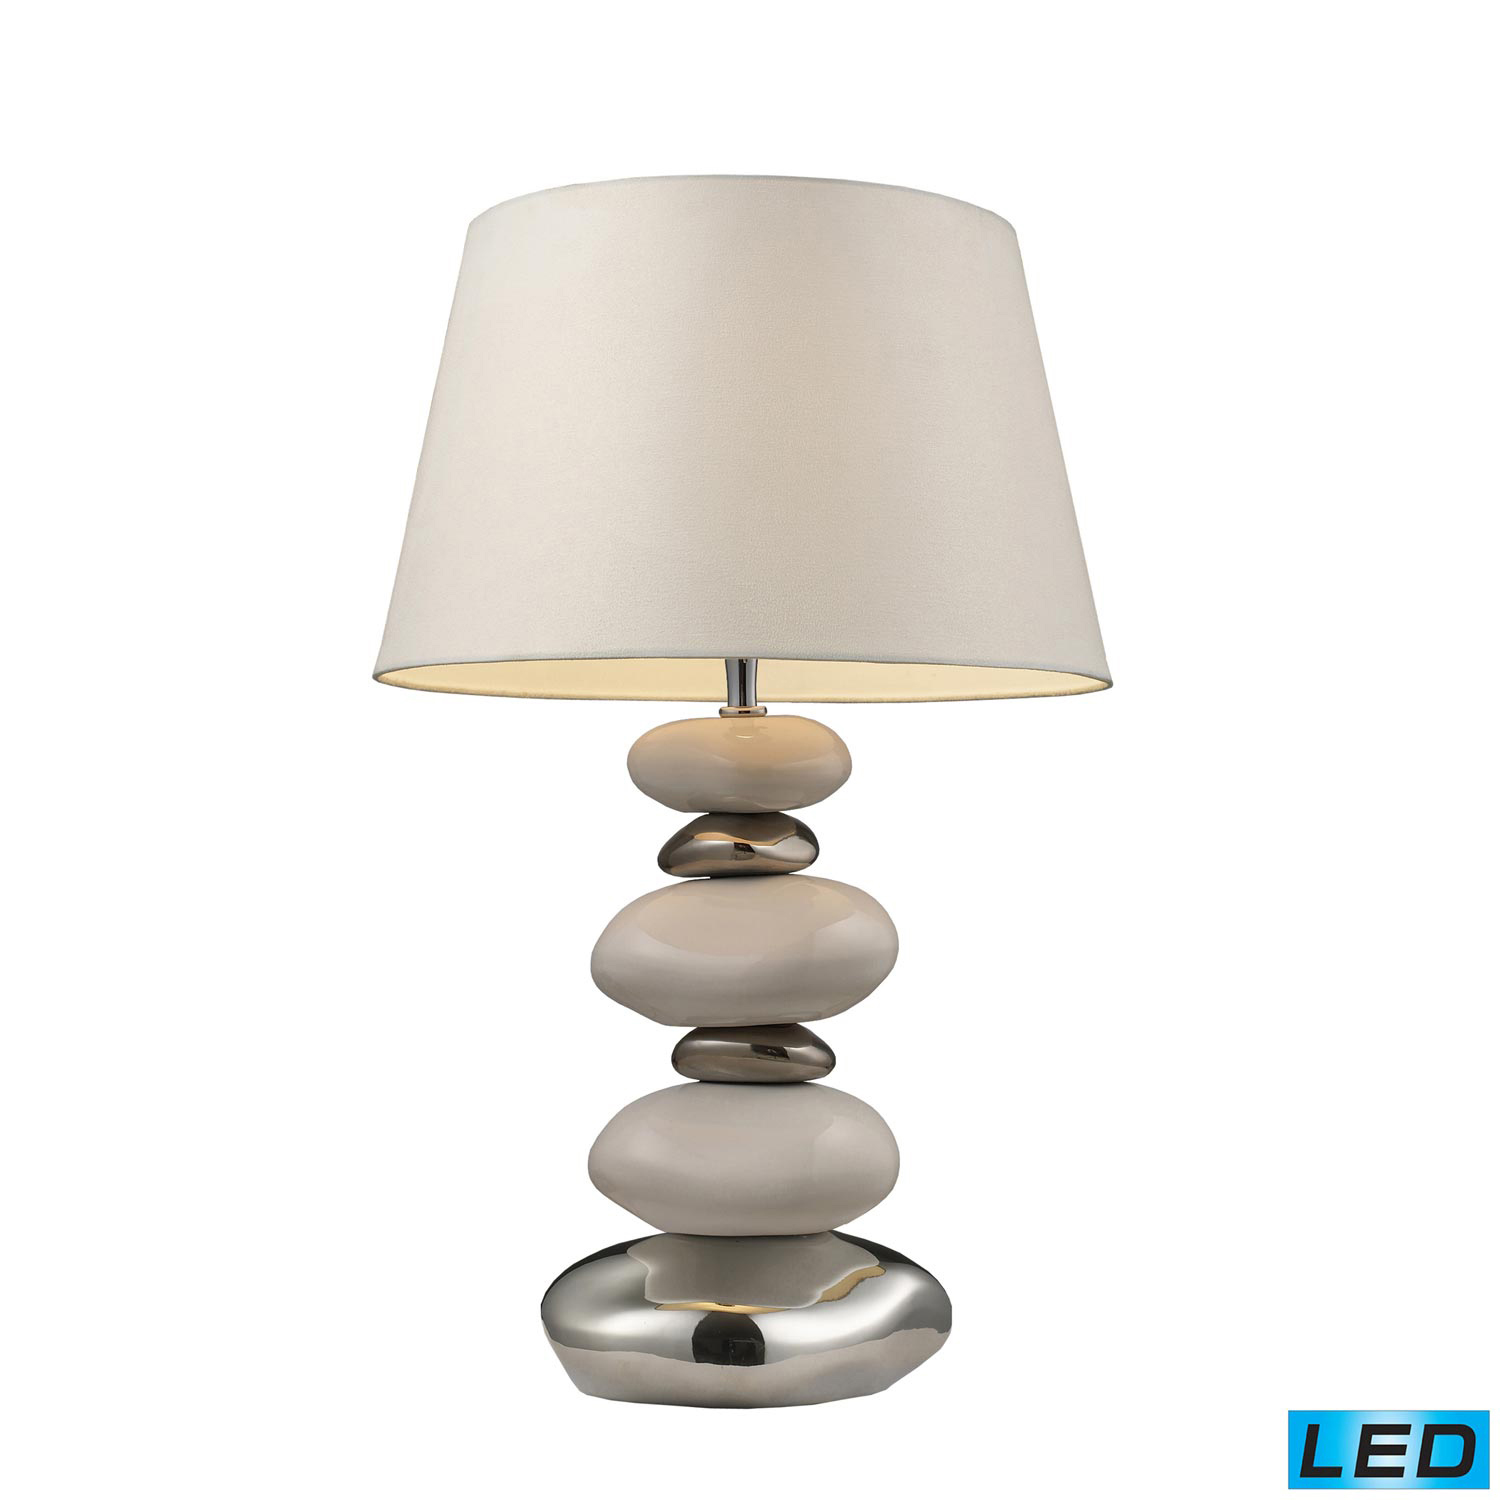 Elk Lighting 3948/1 -LED Elemis Table Lamp - Pure White and Chrome